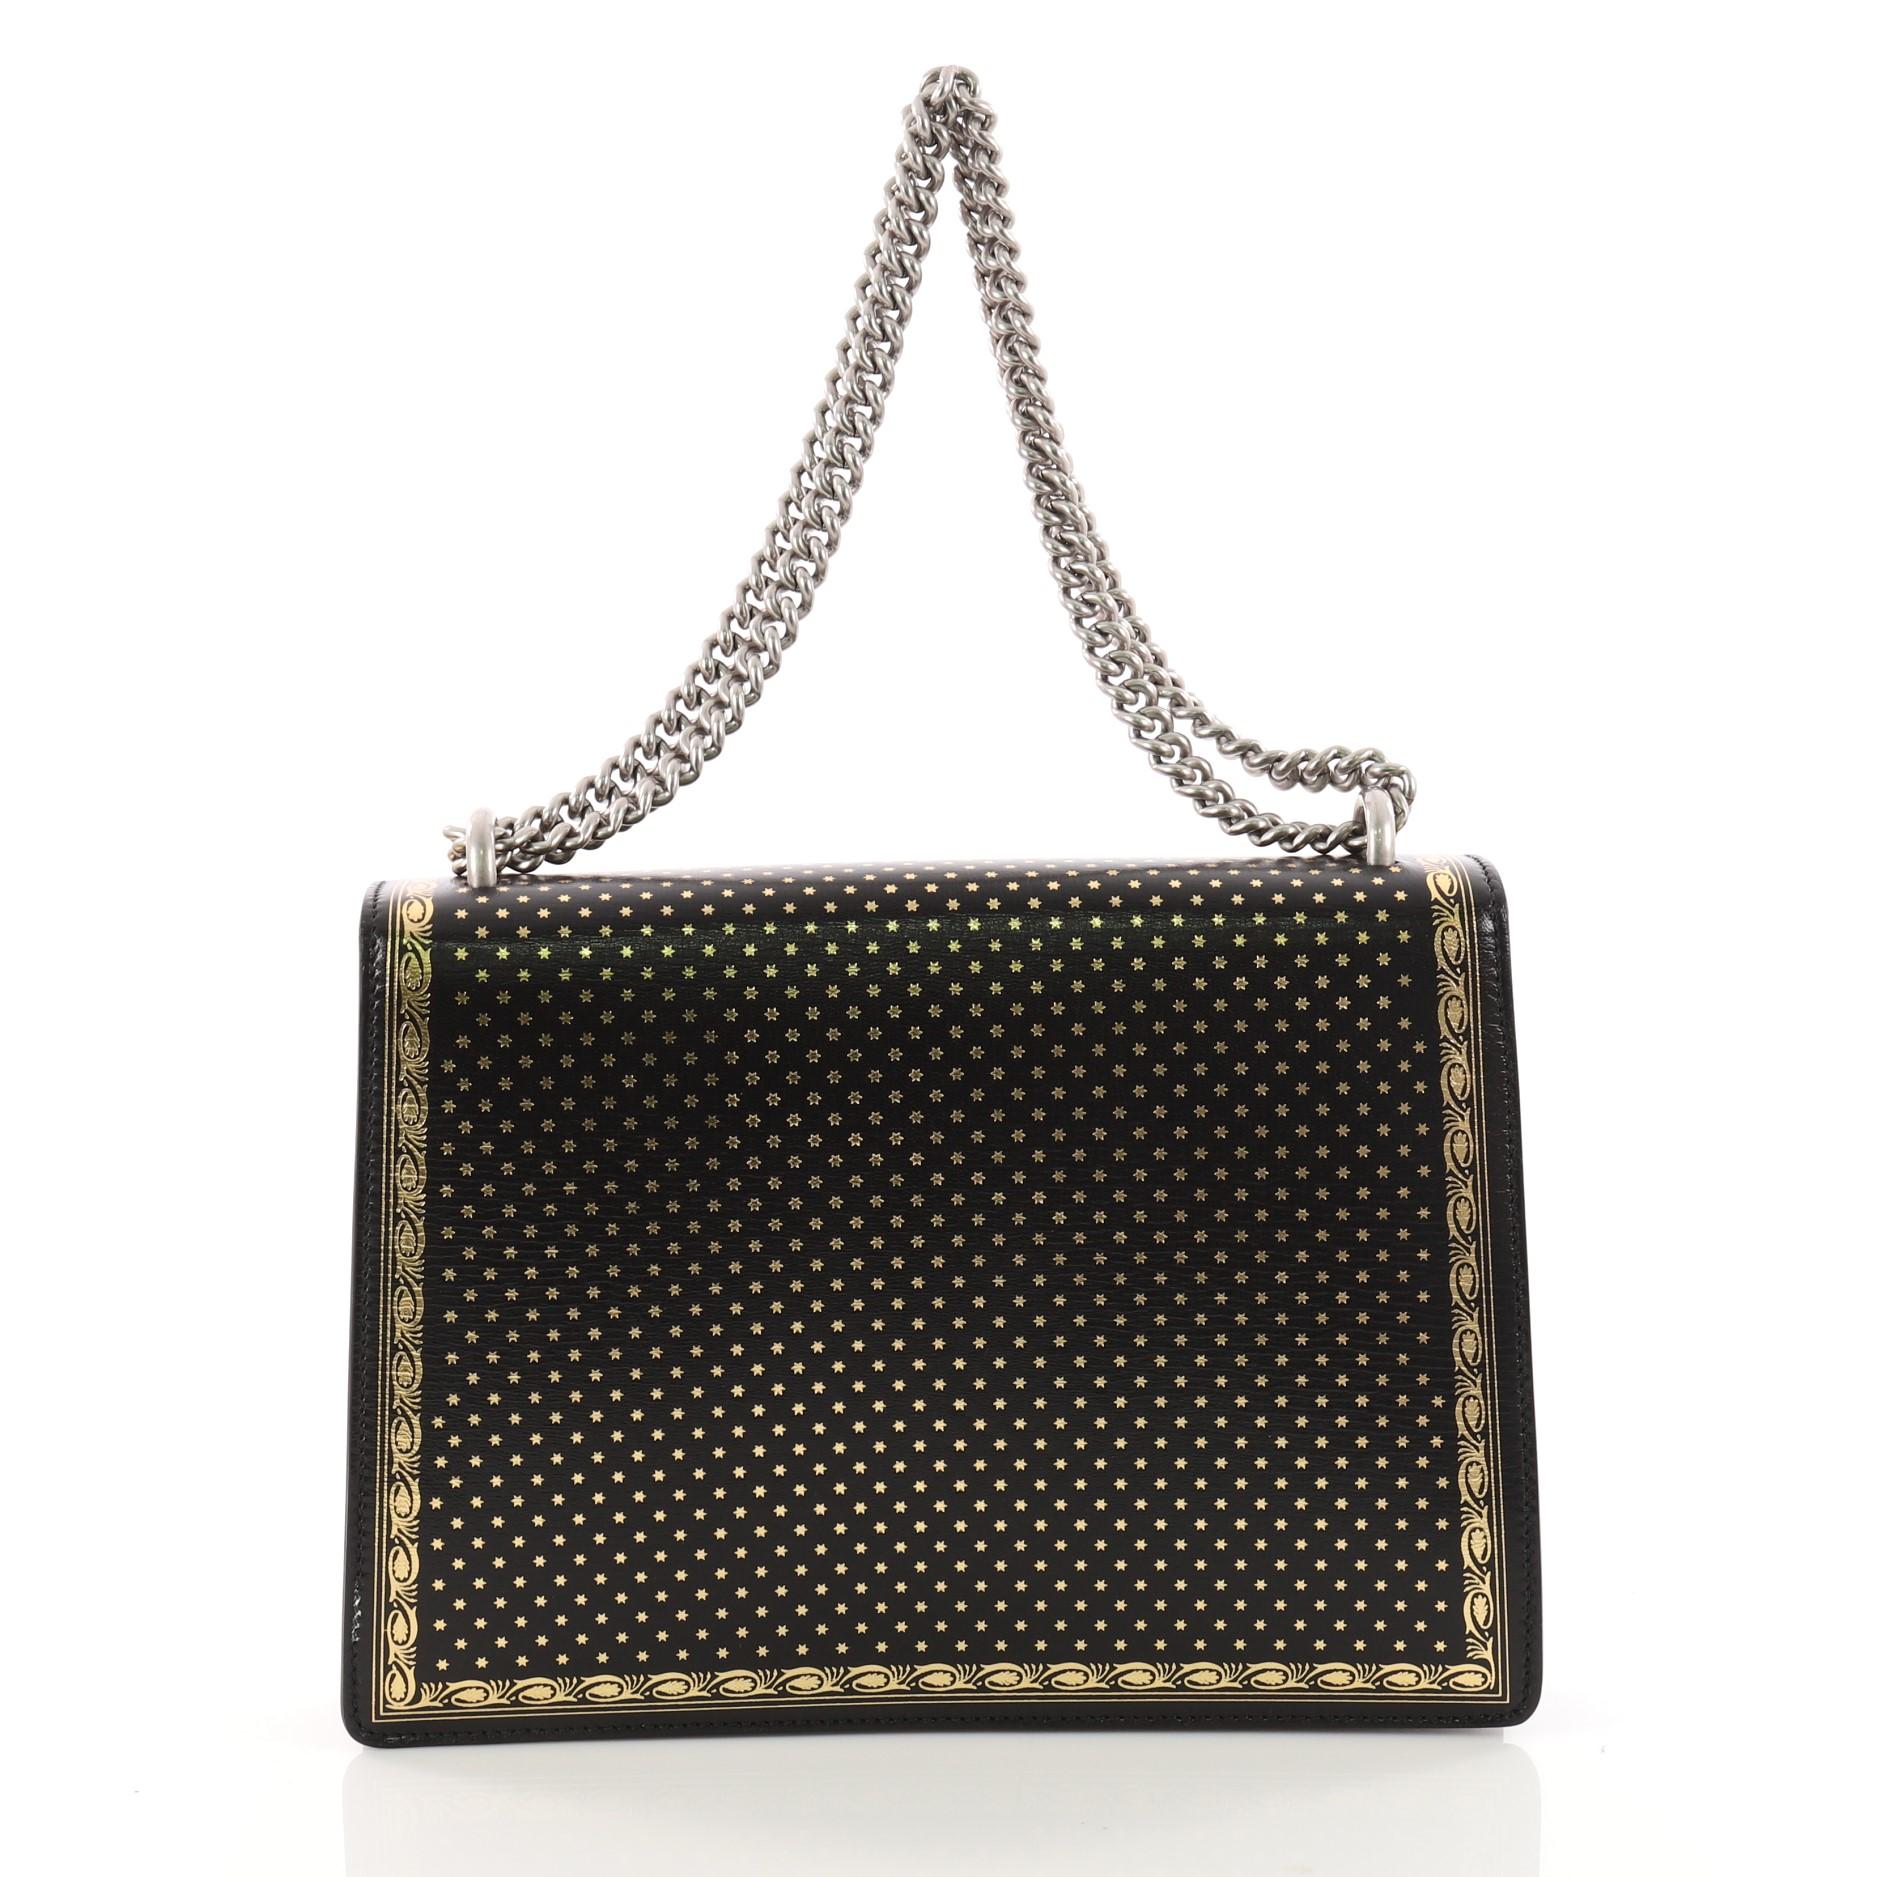 Black Gucci Dionysus Handbag Limited Edition Printed Leather Medium